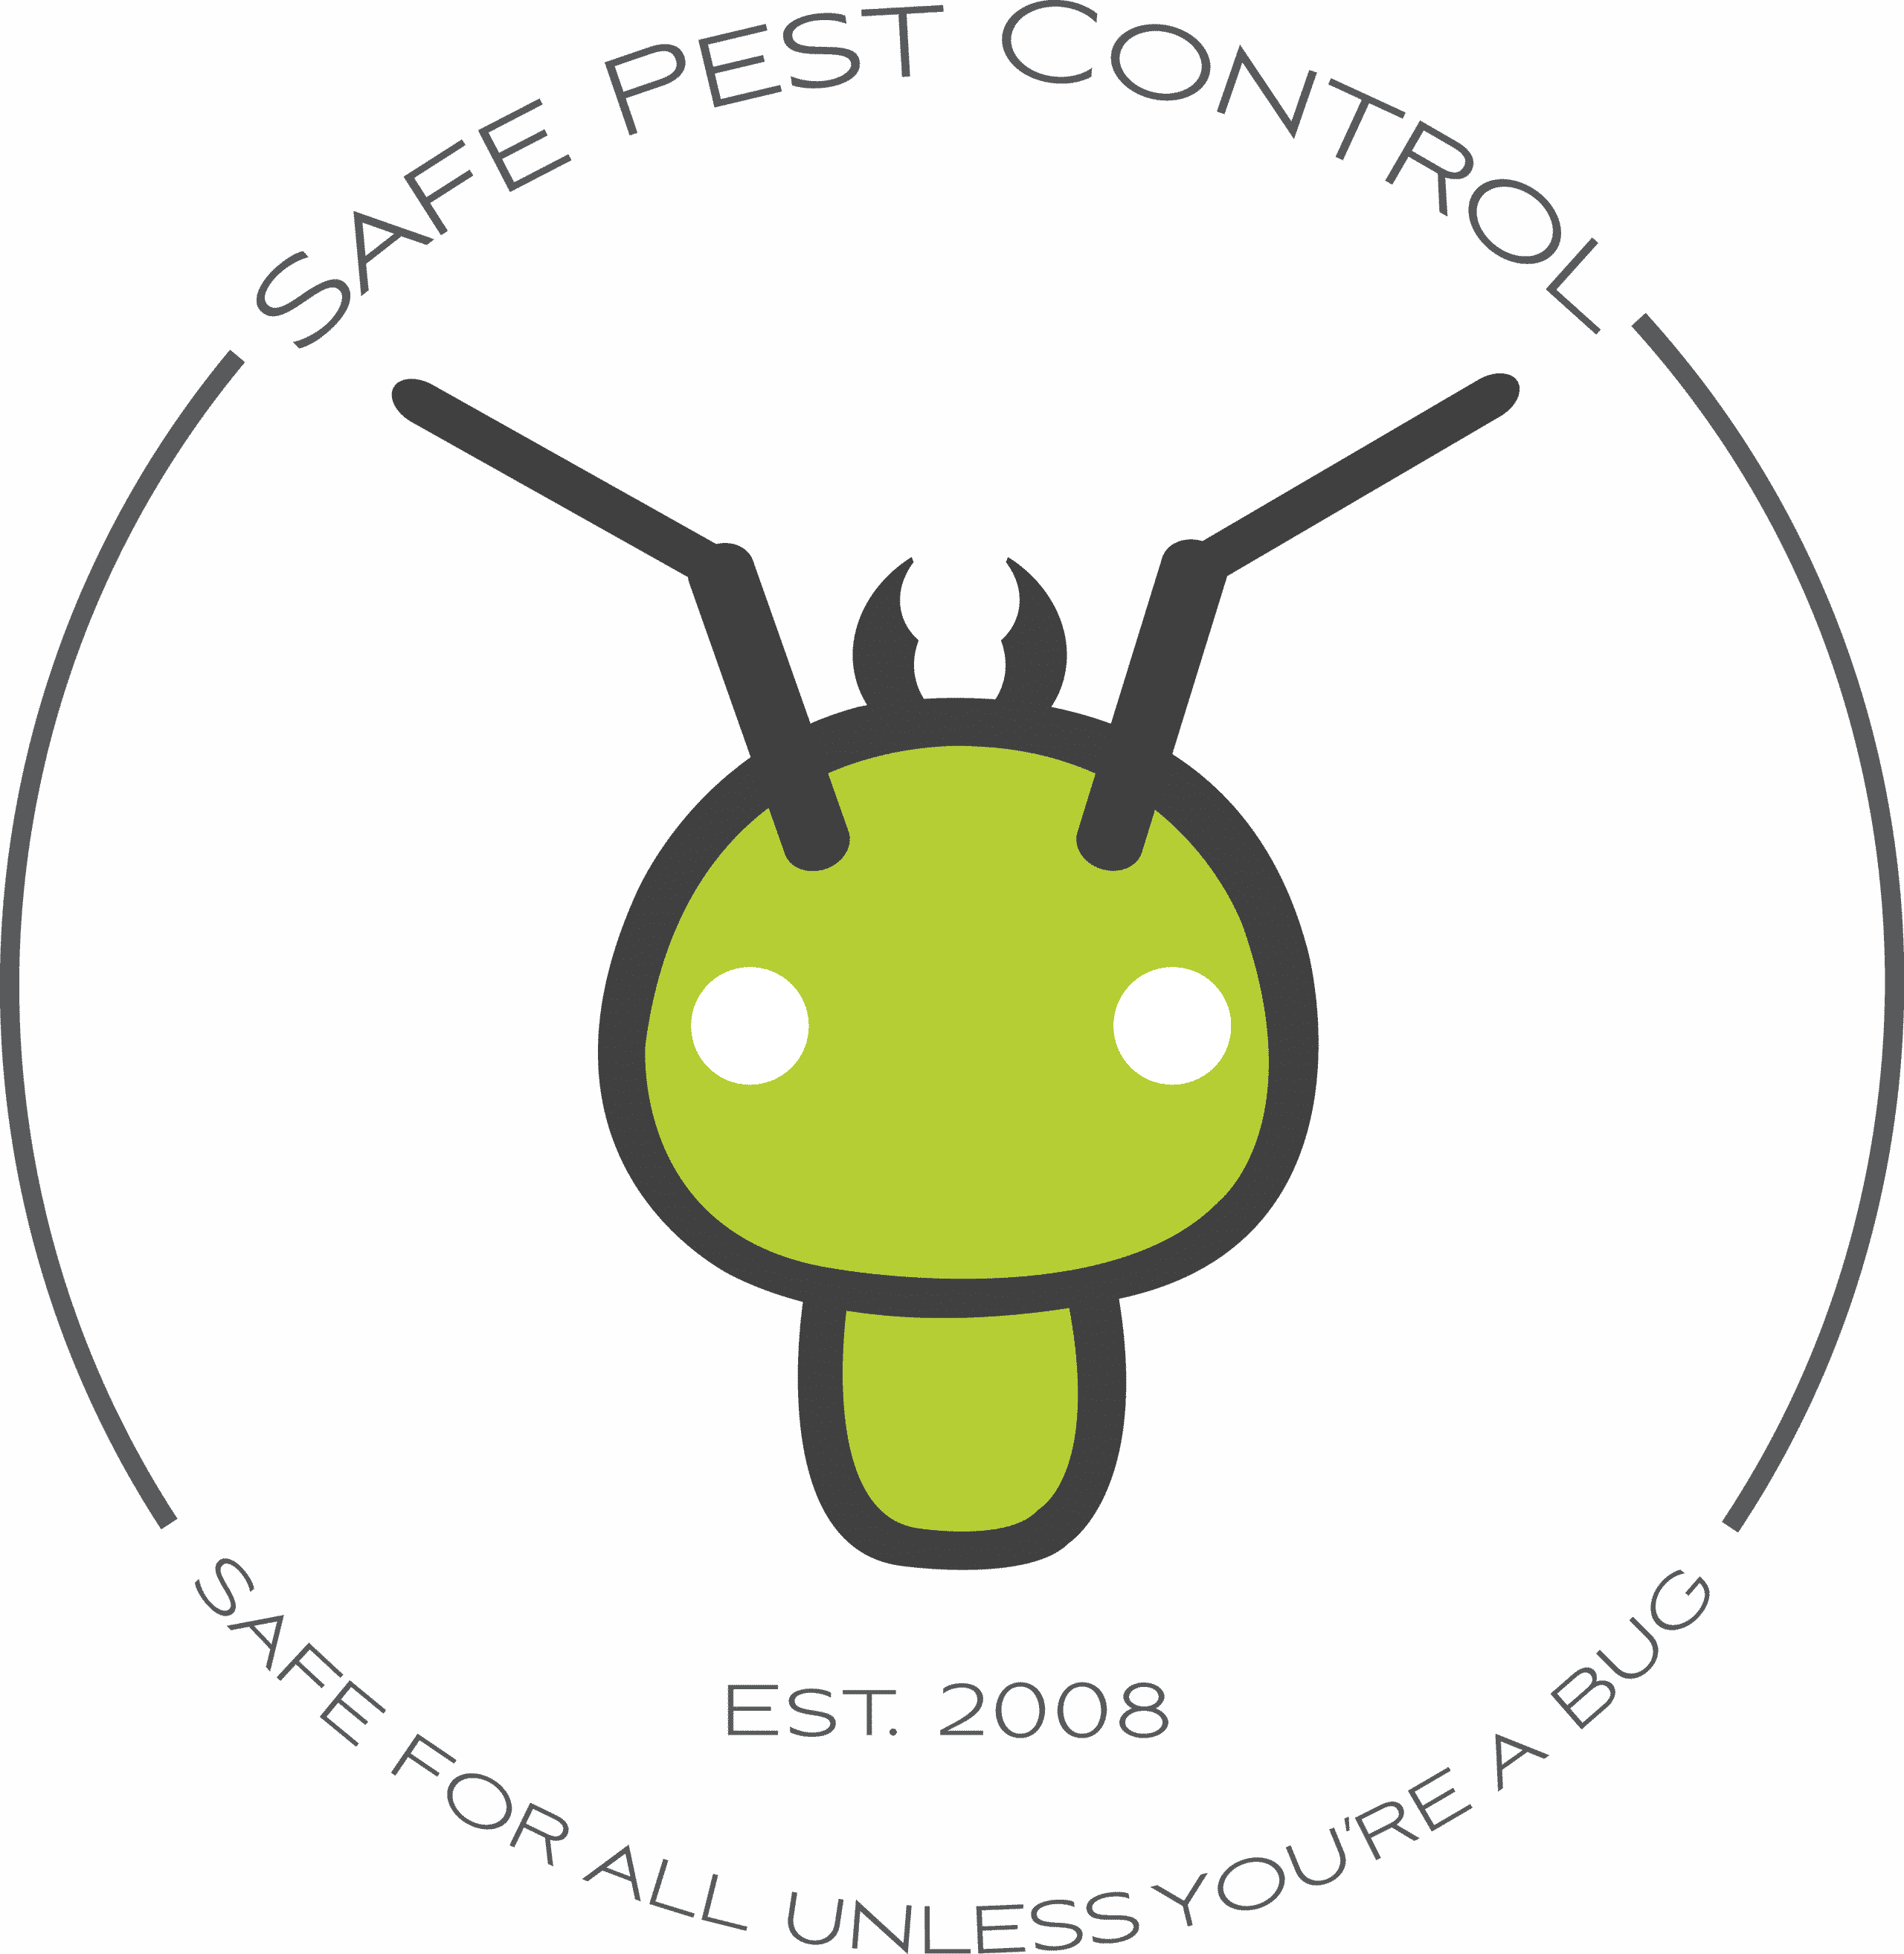 Safe-Pest-Control